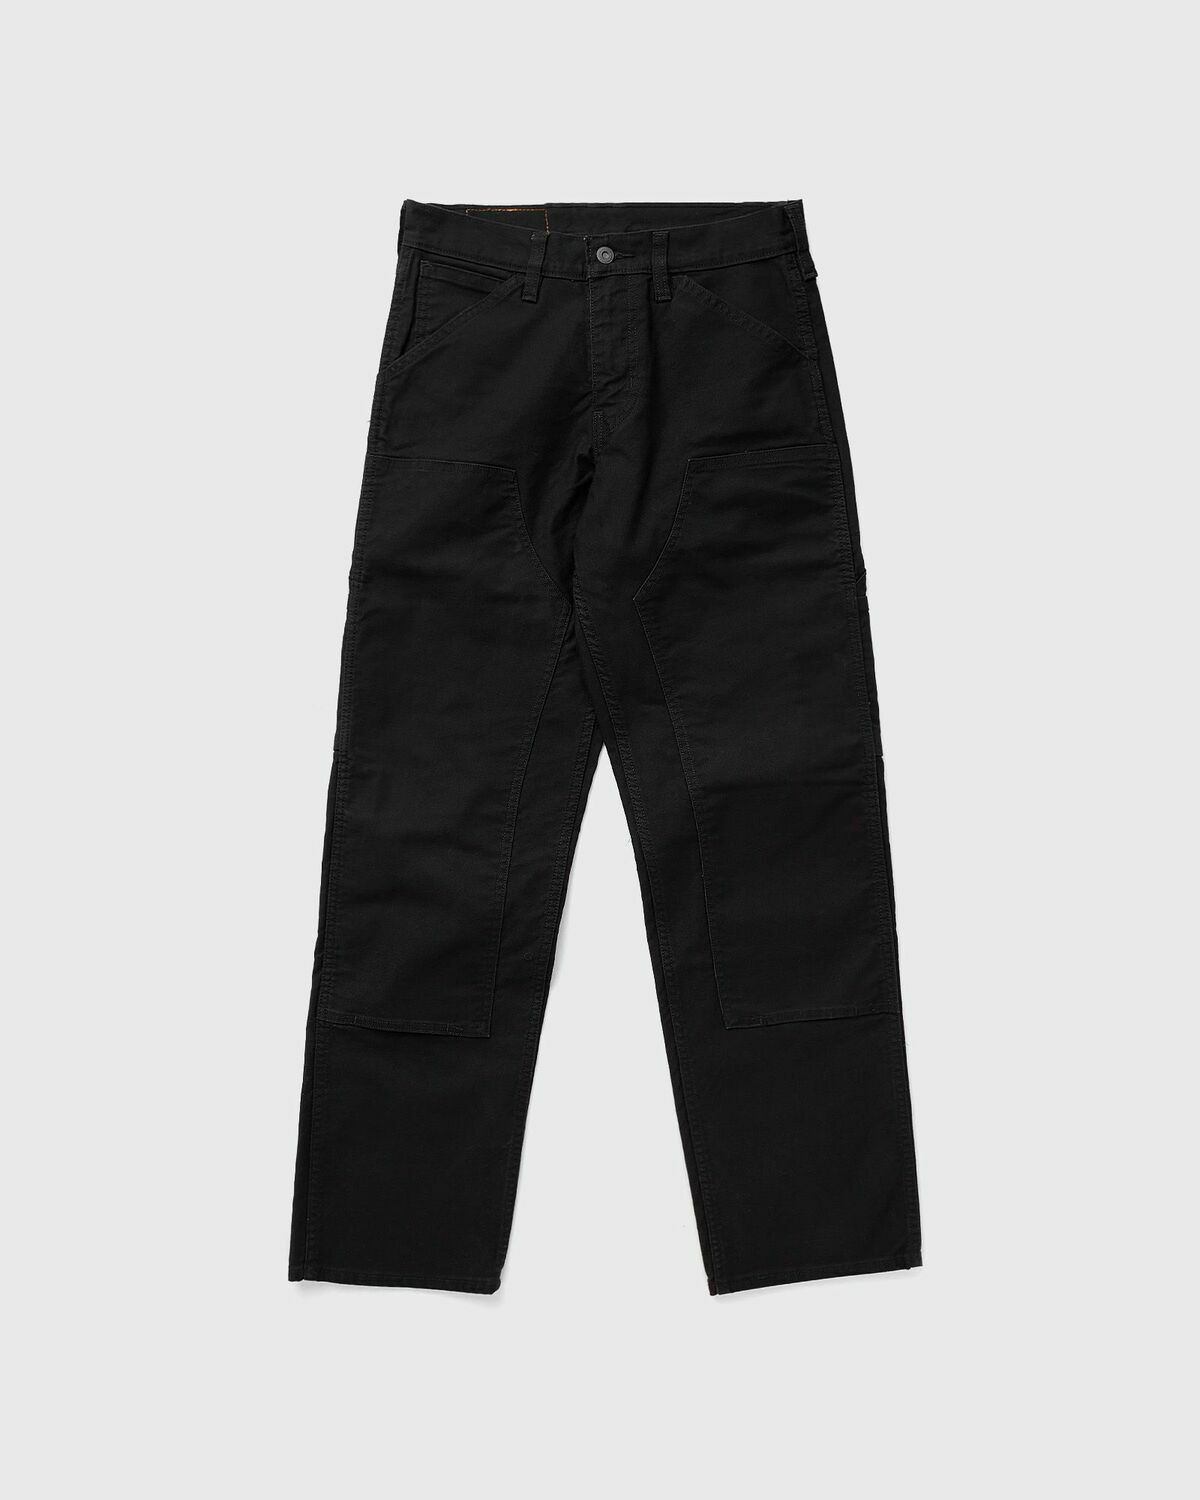 Levis Workwear 565 Dbl Knee Black - Mens - Jeans Levis